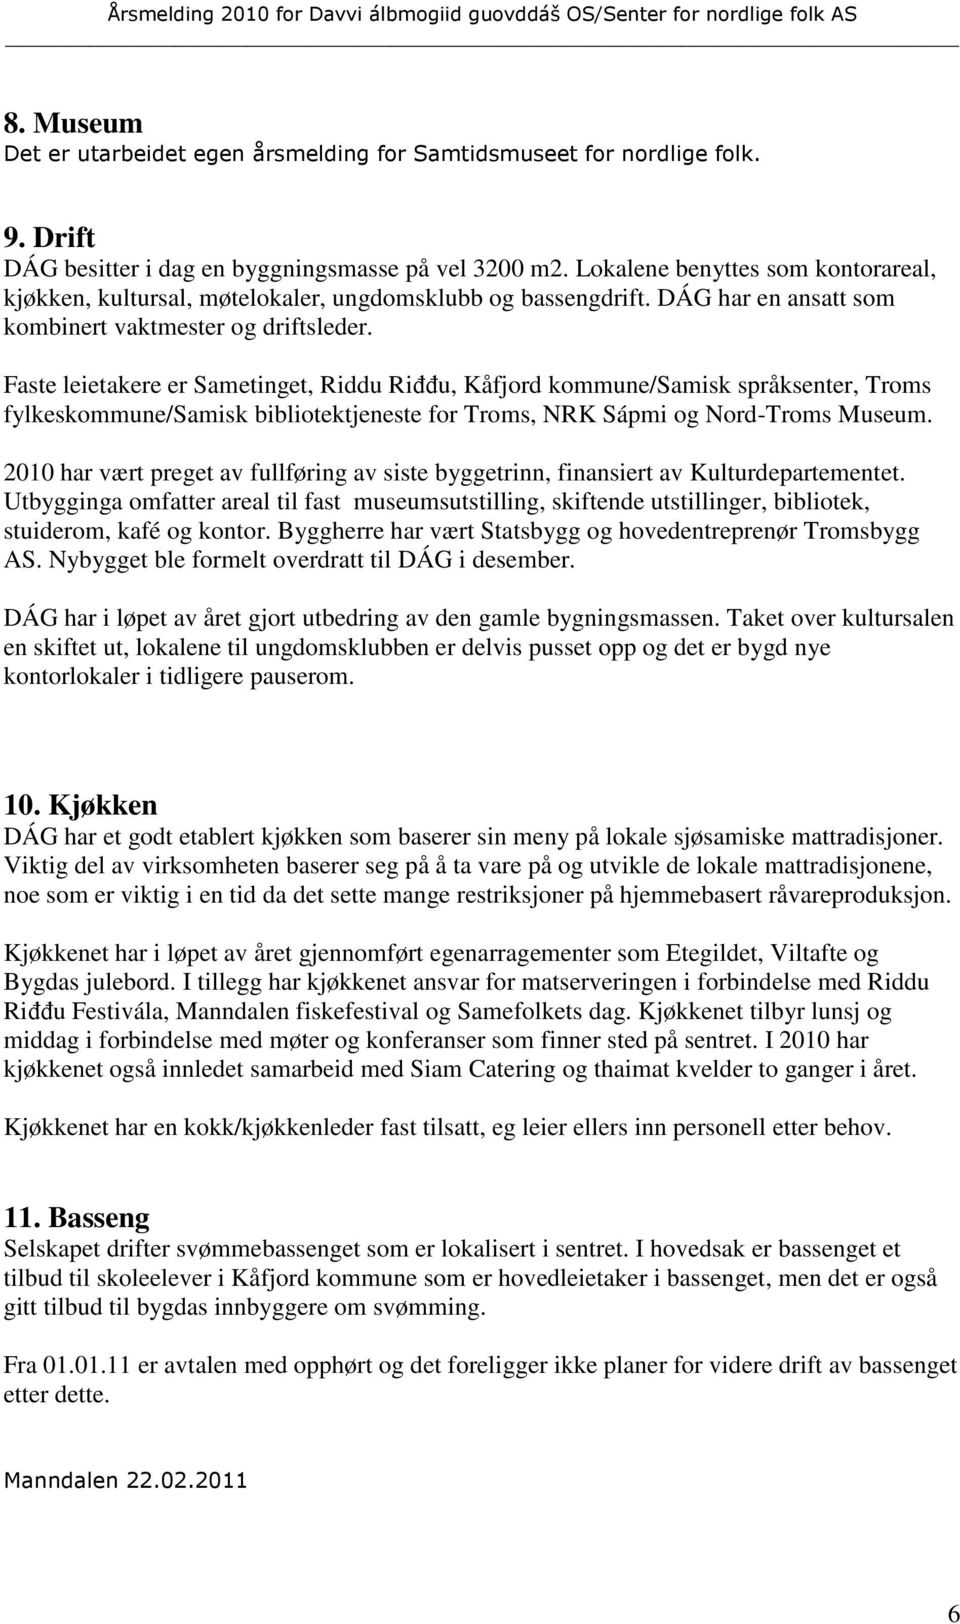 Faste leietakere er Sametinget, Riddu Riññu, Kåfjord kommune/samisk språksenter, Troms fylkeskommune/samisk bibliotektjeneste for Troms, NRK Sápmi og Nord-Troms Museum.